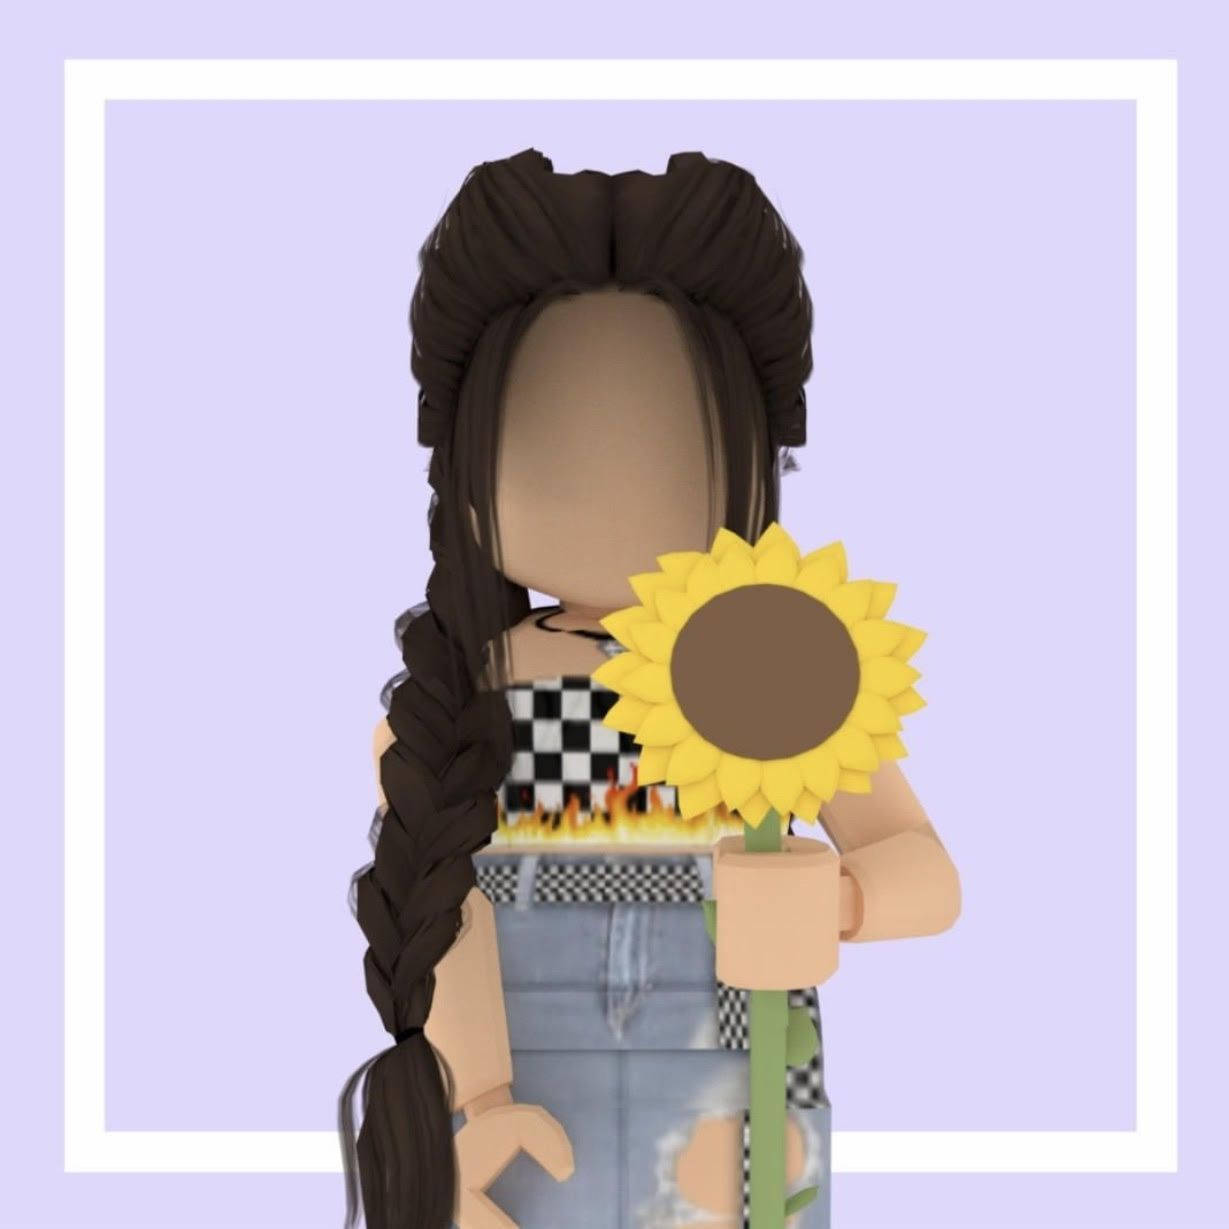 Aesthetic Roblox Girl Holding A Big Sunflower Wallpaper